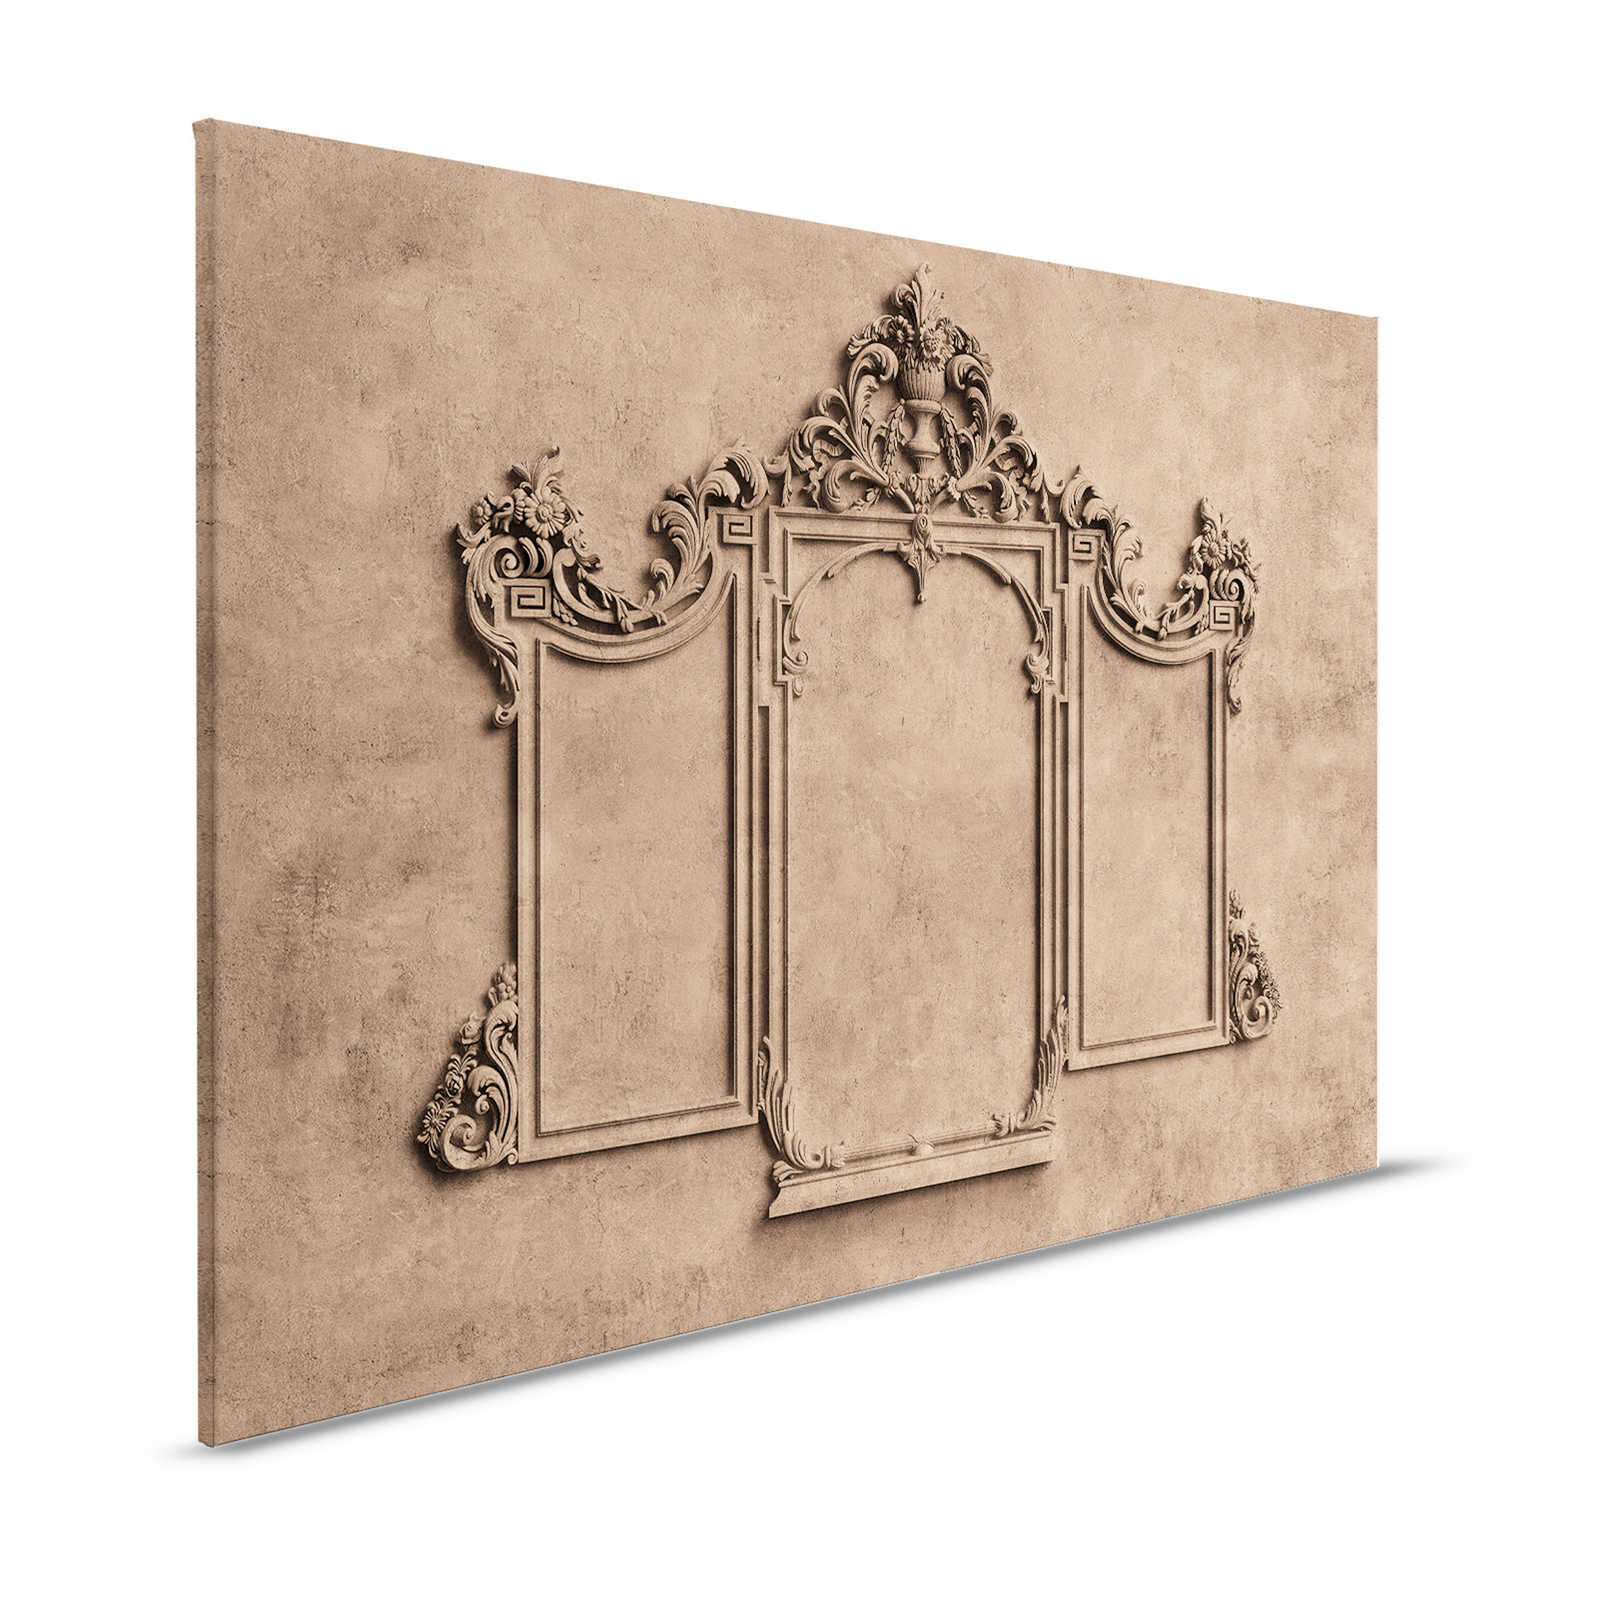 Lyon 1 - Canvas schilderij 3D stucco frame & gipslook in bruin - 1.20 m x 0.80 m
